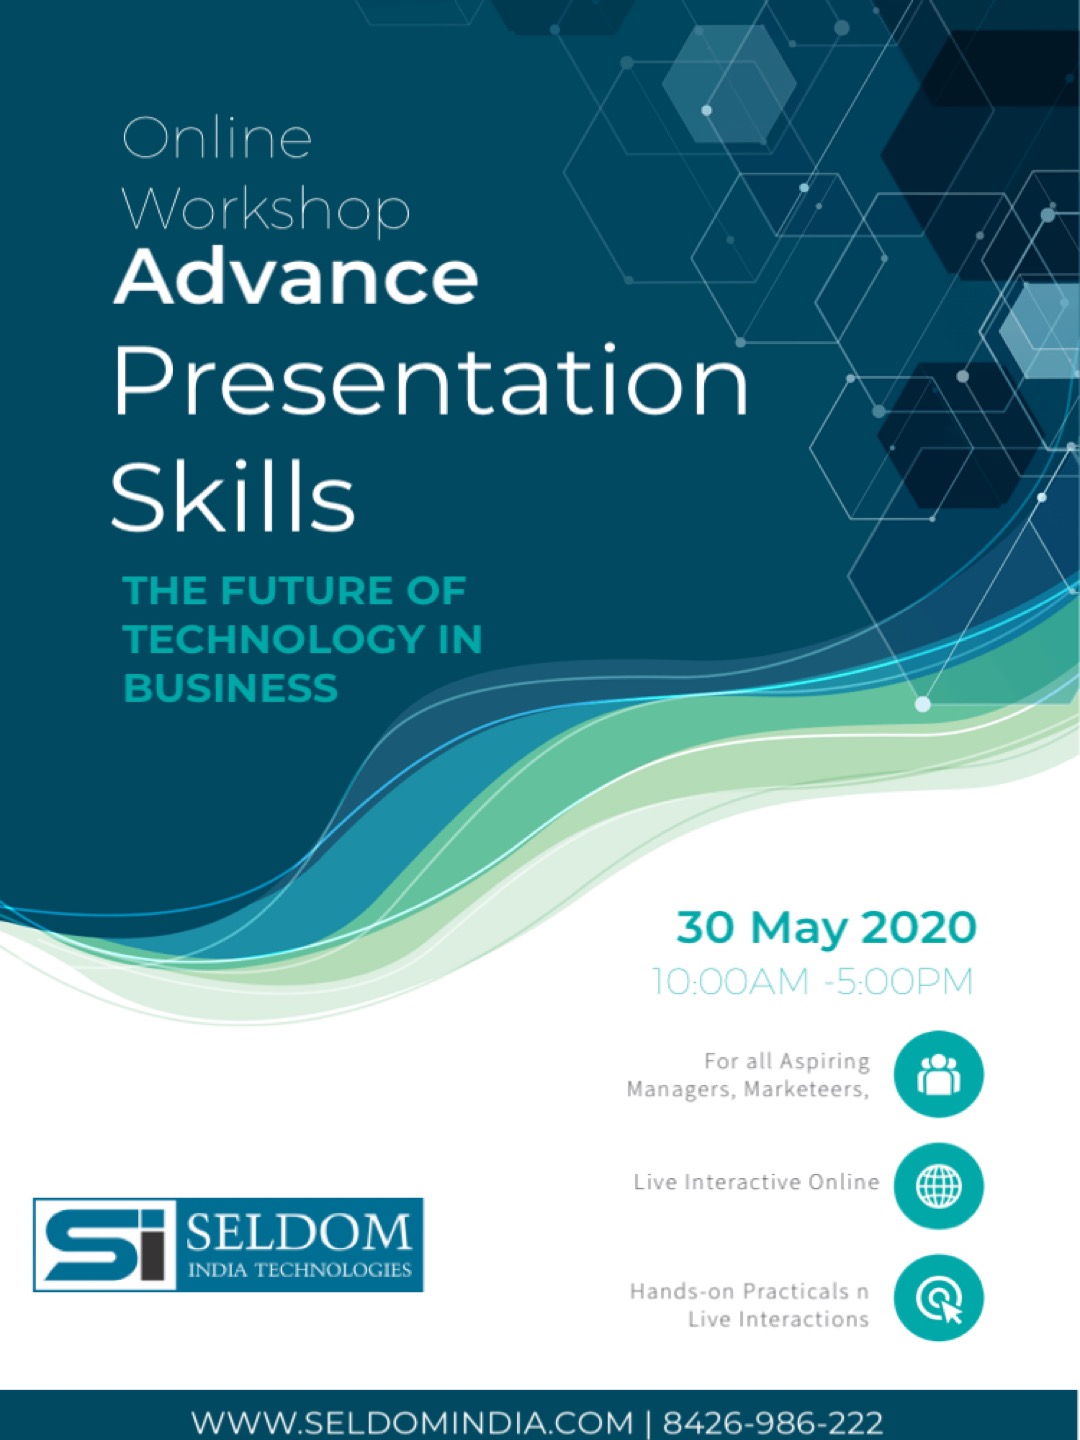 Online Workshop on Advance Presentation Skills  Seldom India